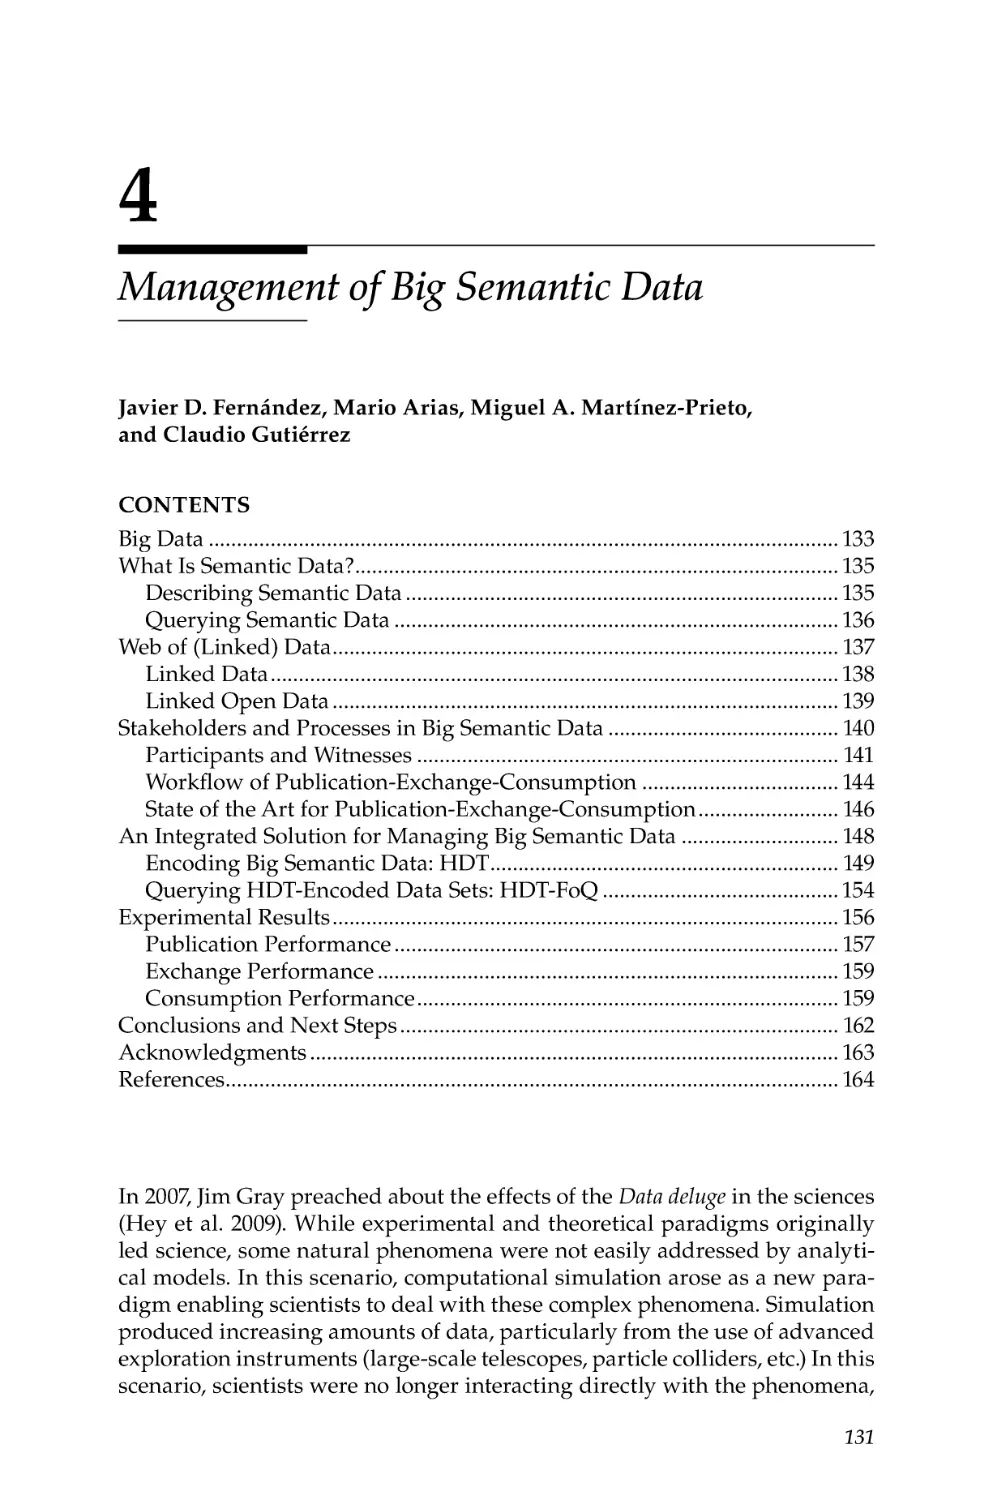 4. Management of Big Semantic Data